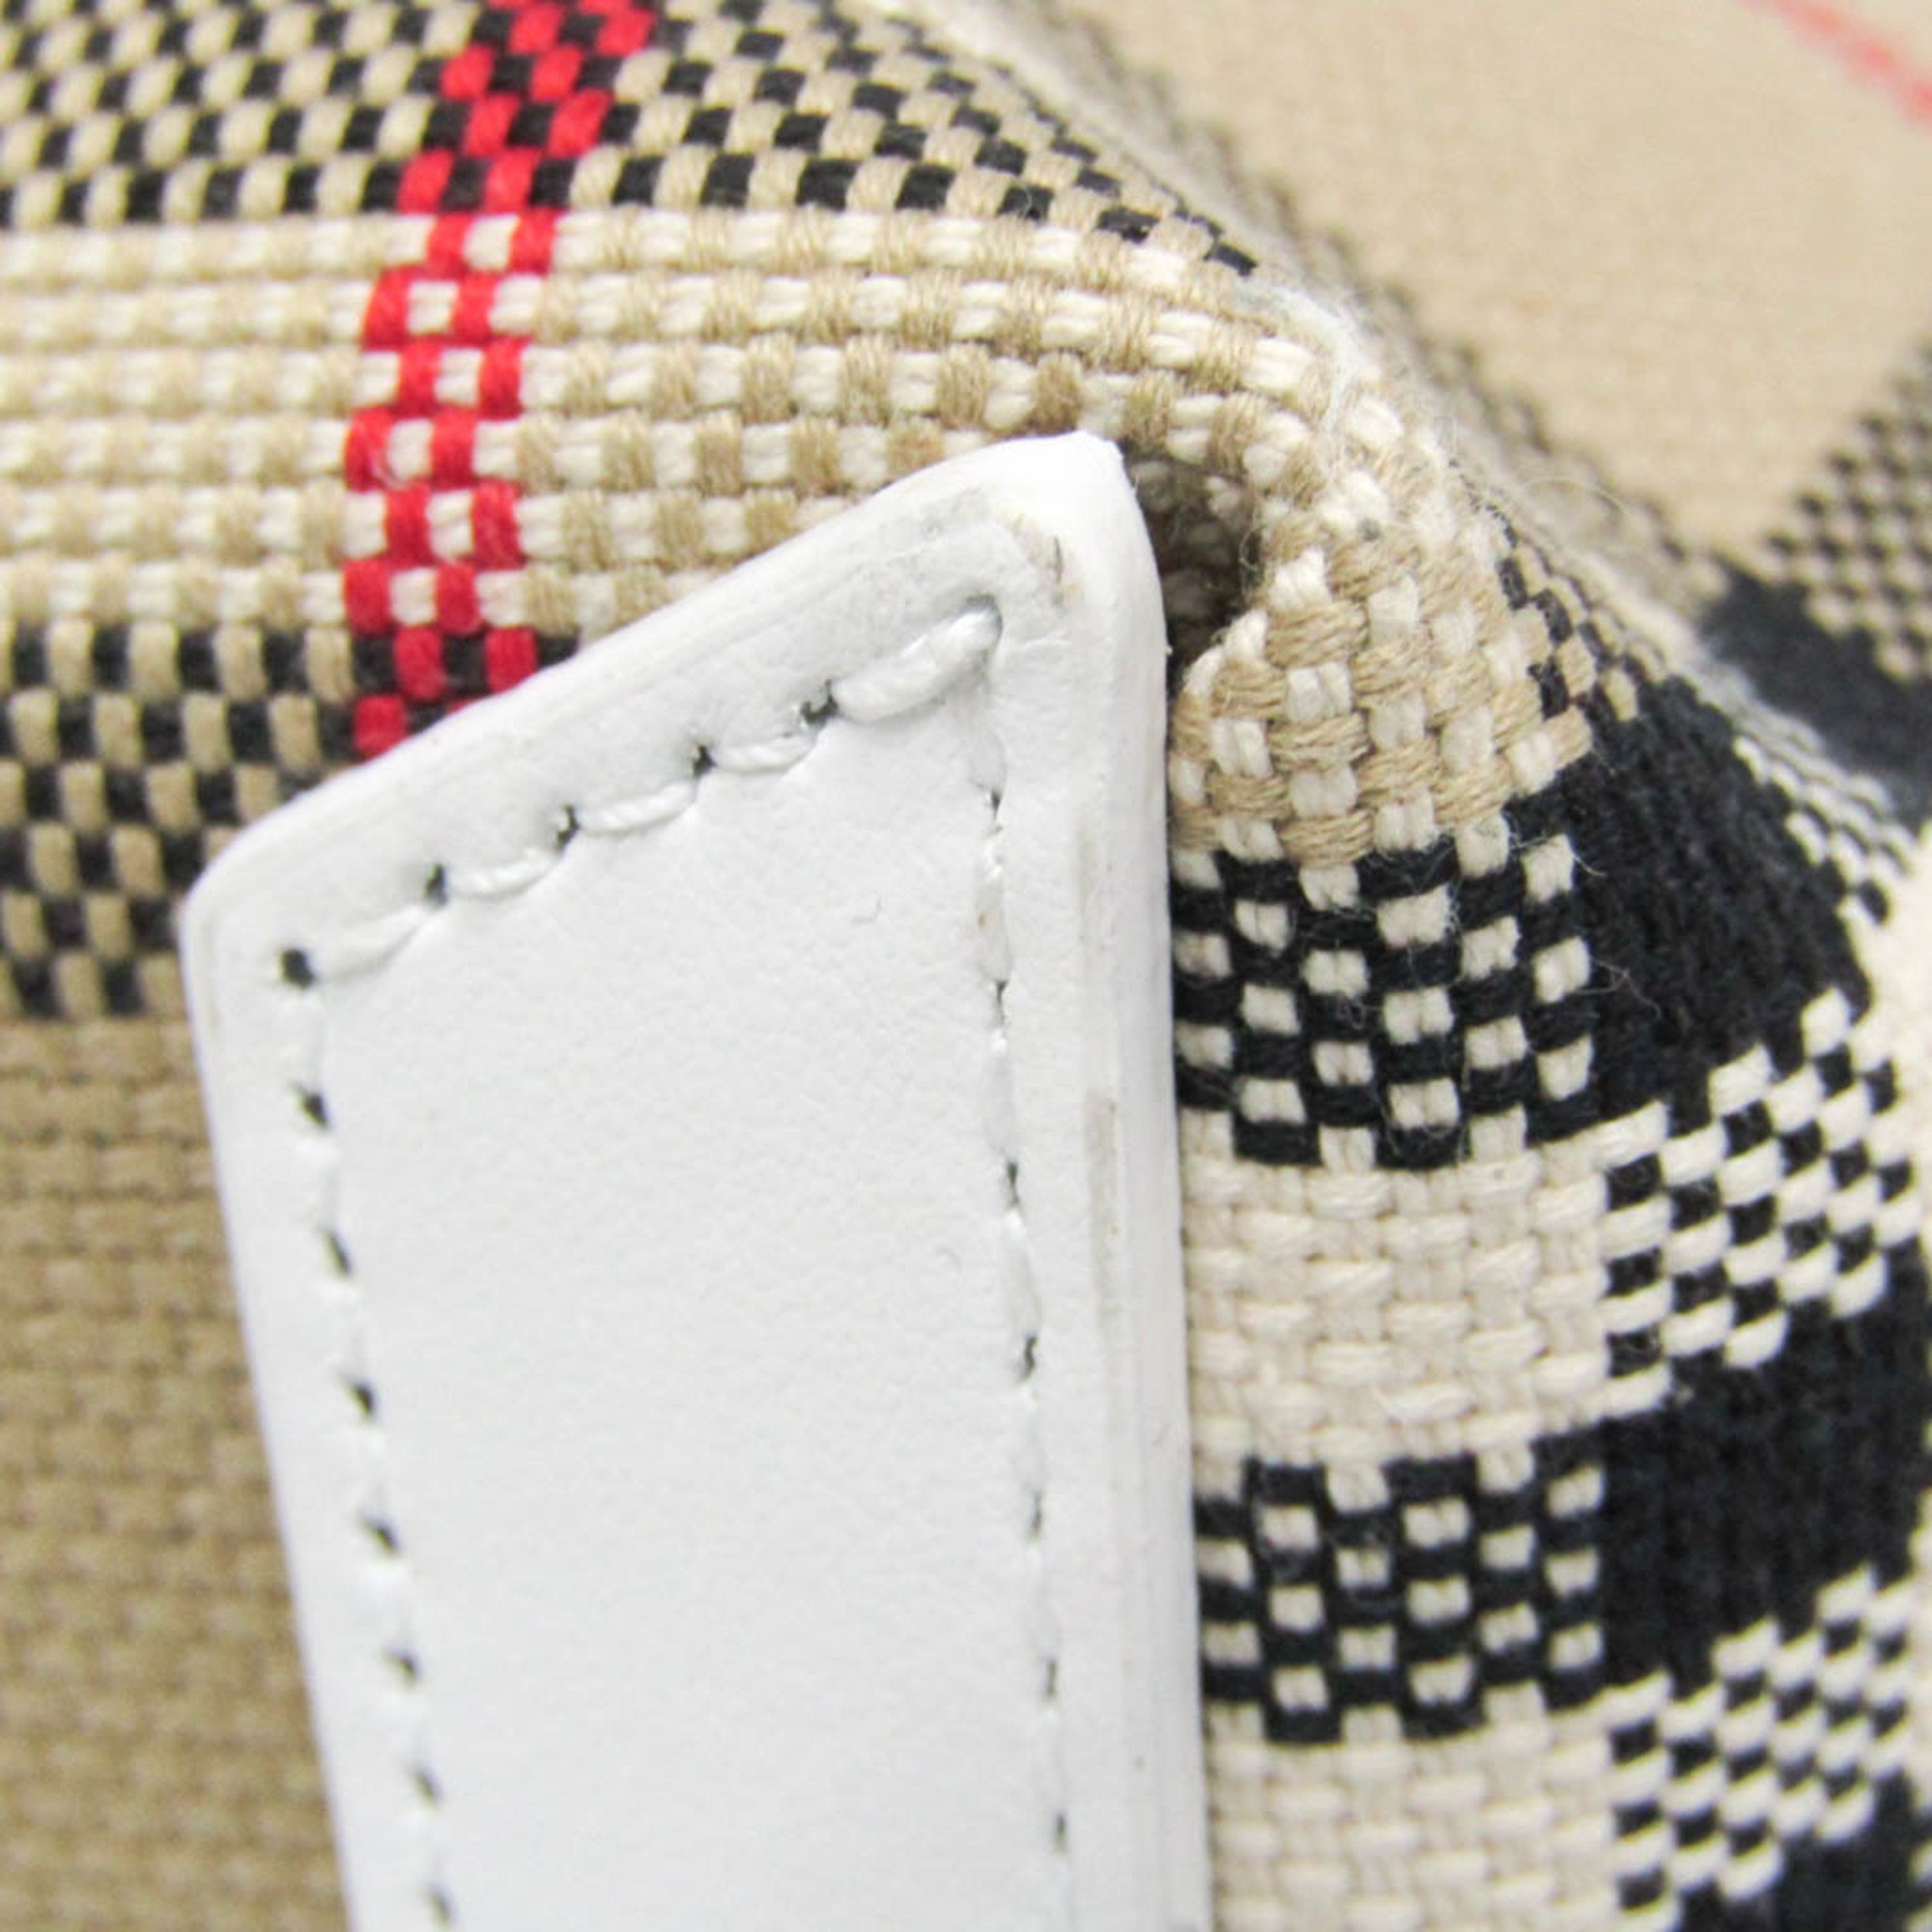 Burberry Mini London 80723481 Women's Canvas,Leather Handbag,Shoulder Bag Beige,Black,Red Color,White